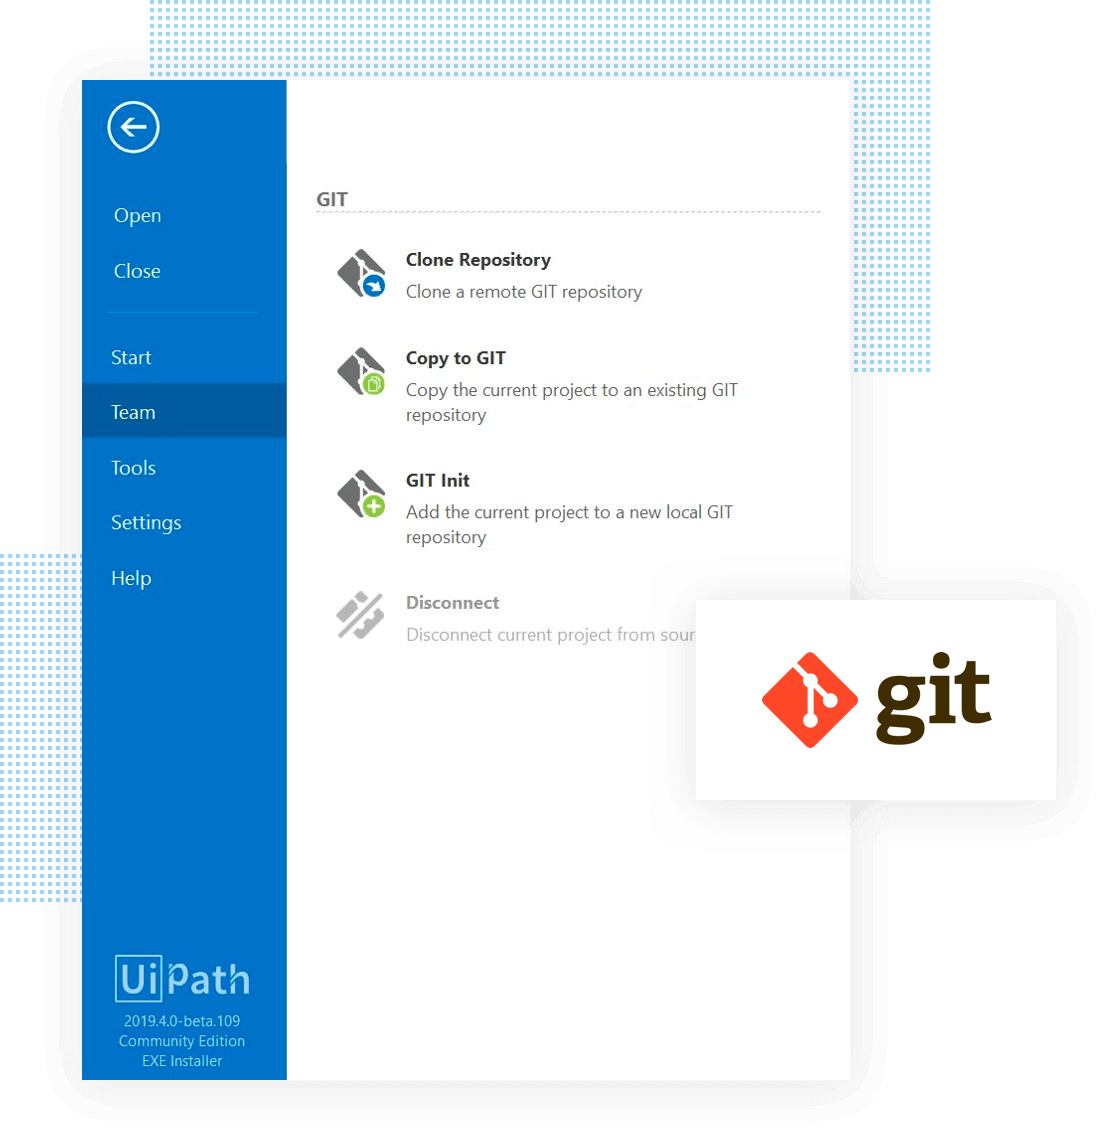 Git Integration